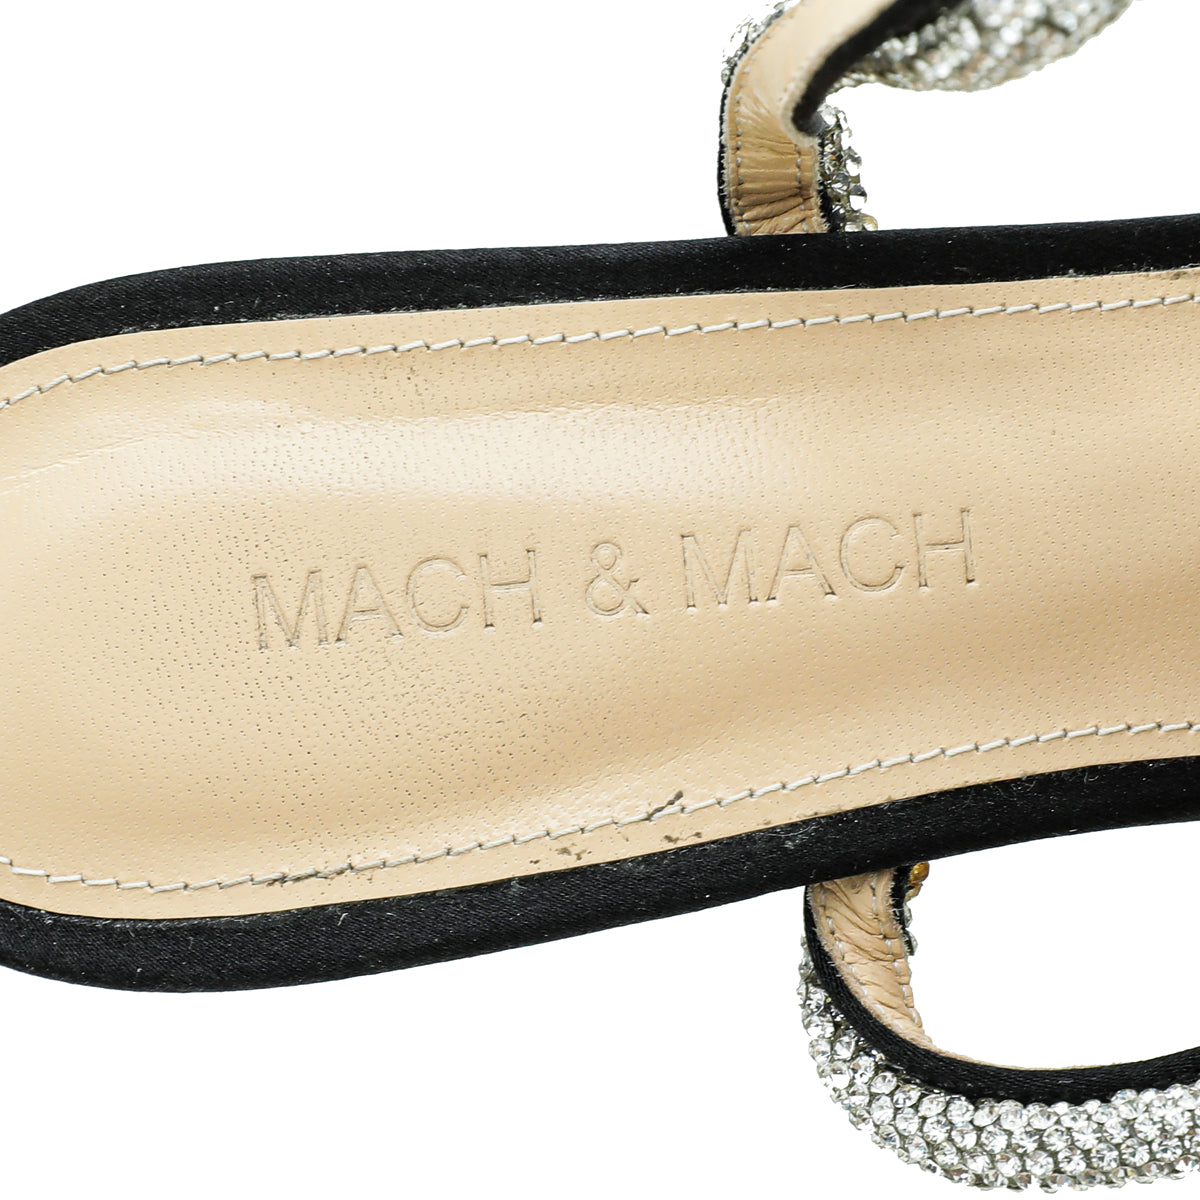 Mach & Mach Black Satin Crystal Bow Ankle Strap Pumps 37